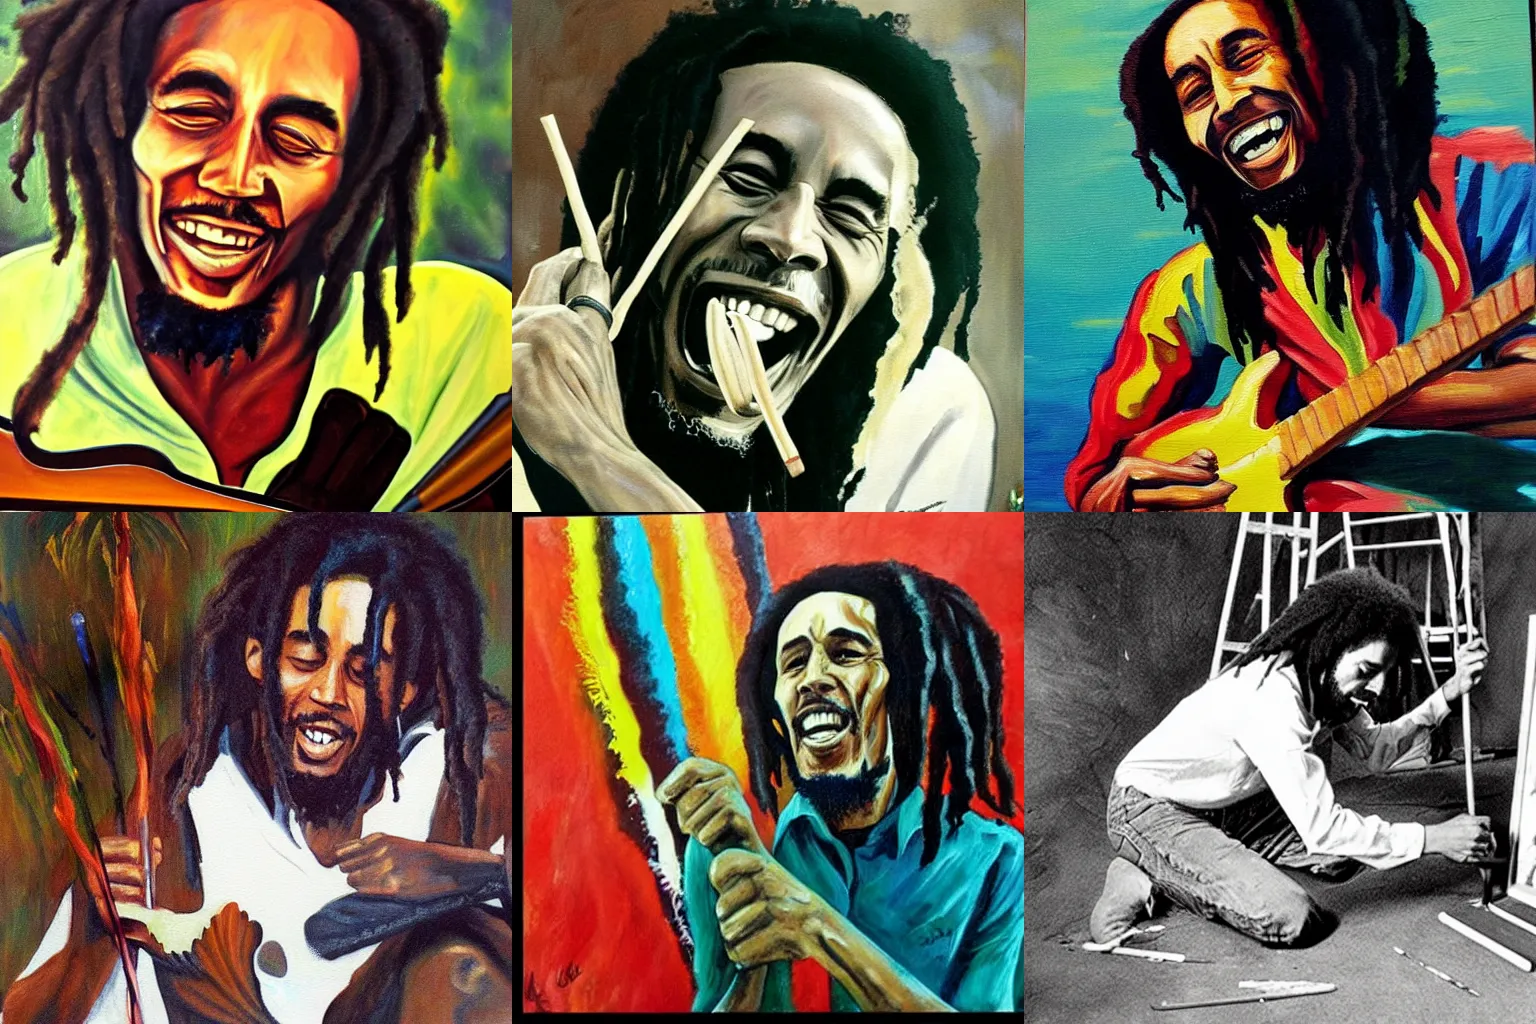 Prompt: Bob Marley painting a stickman